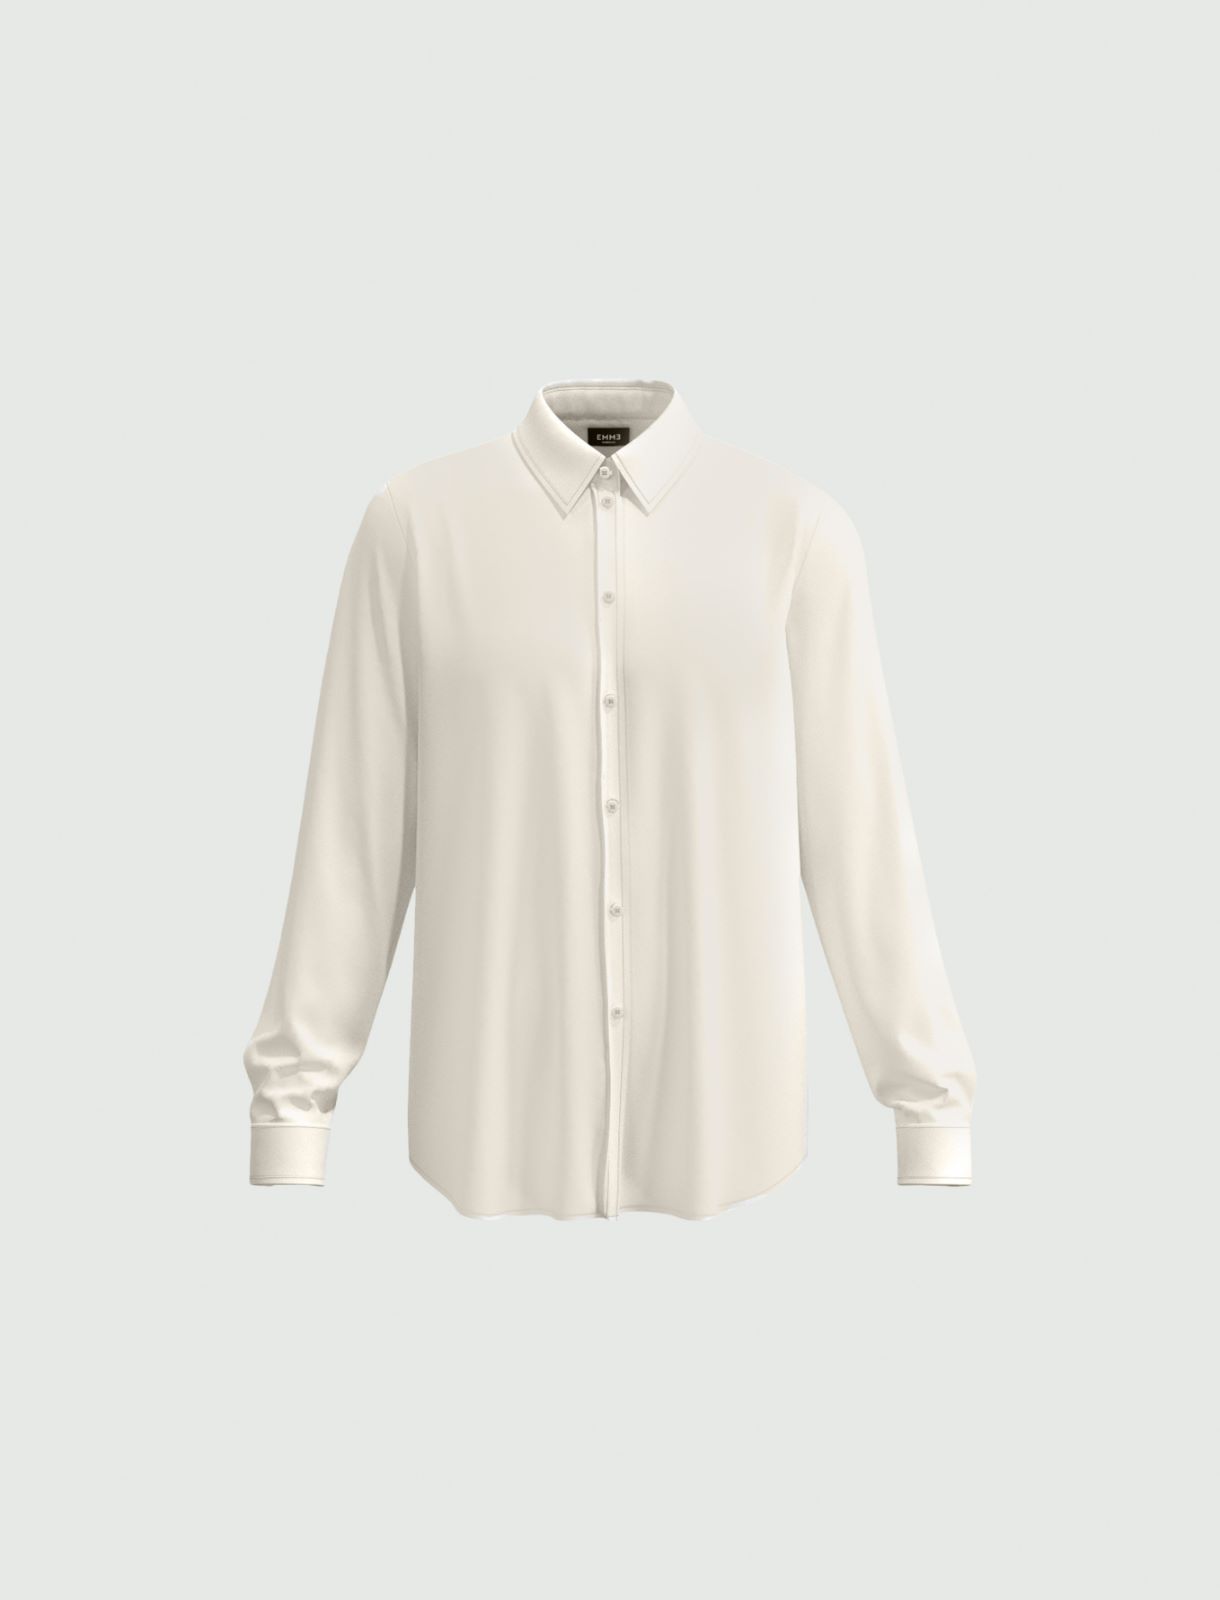 Crepe shirt - White - Persona